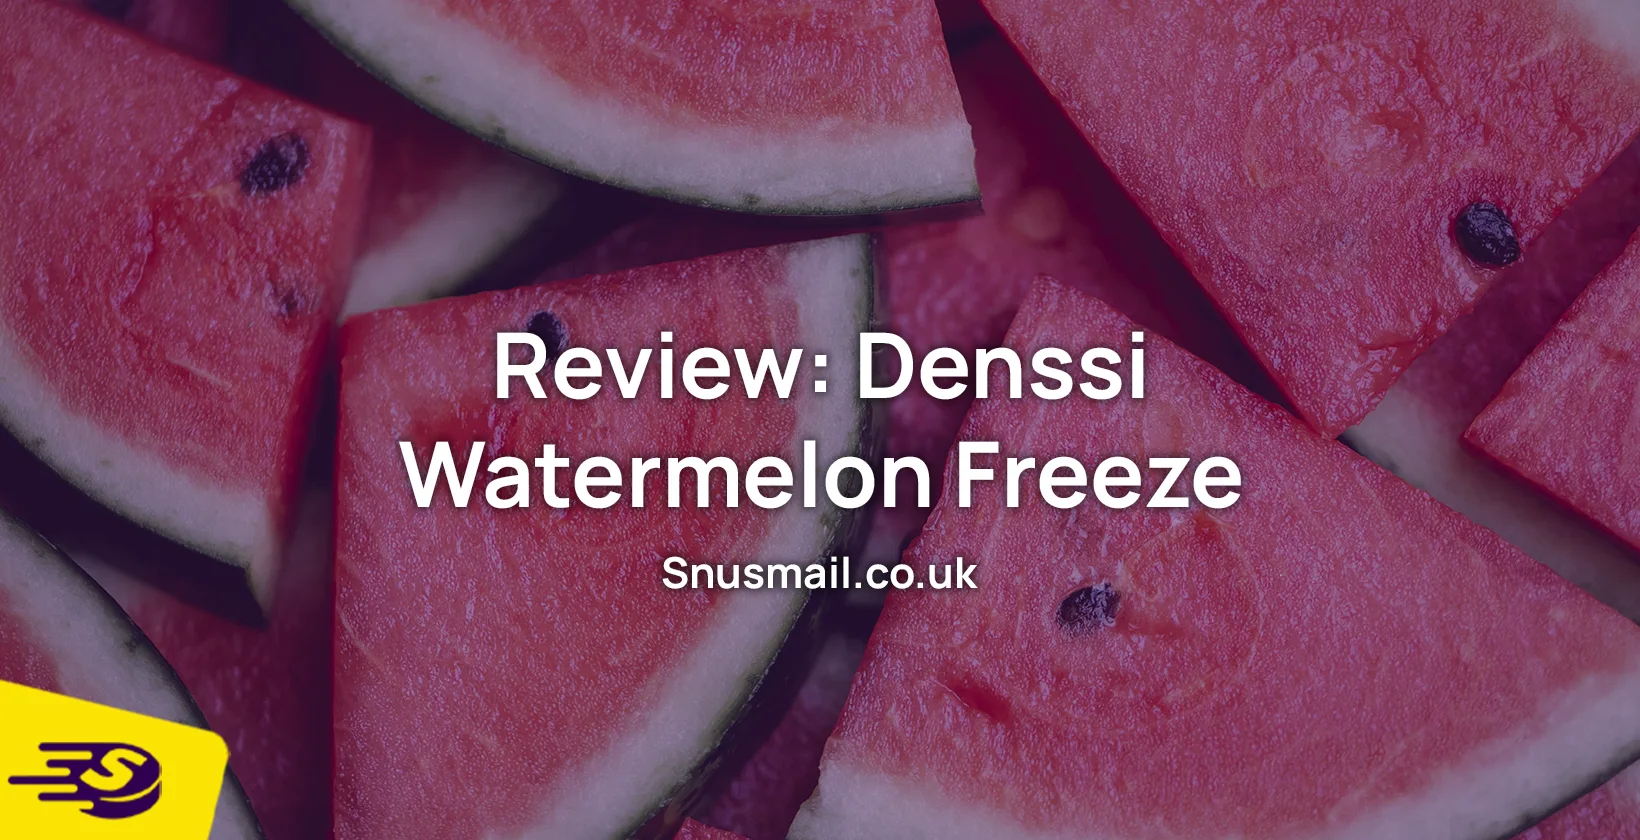 Denssiwatermelonfreeze review